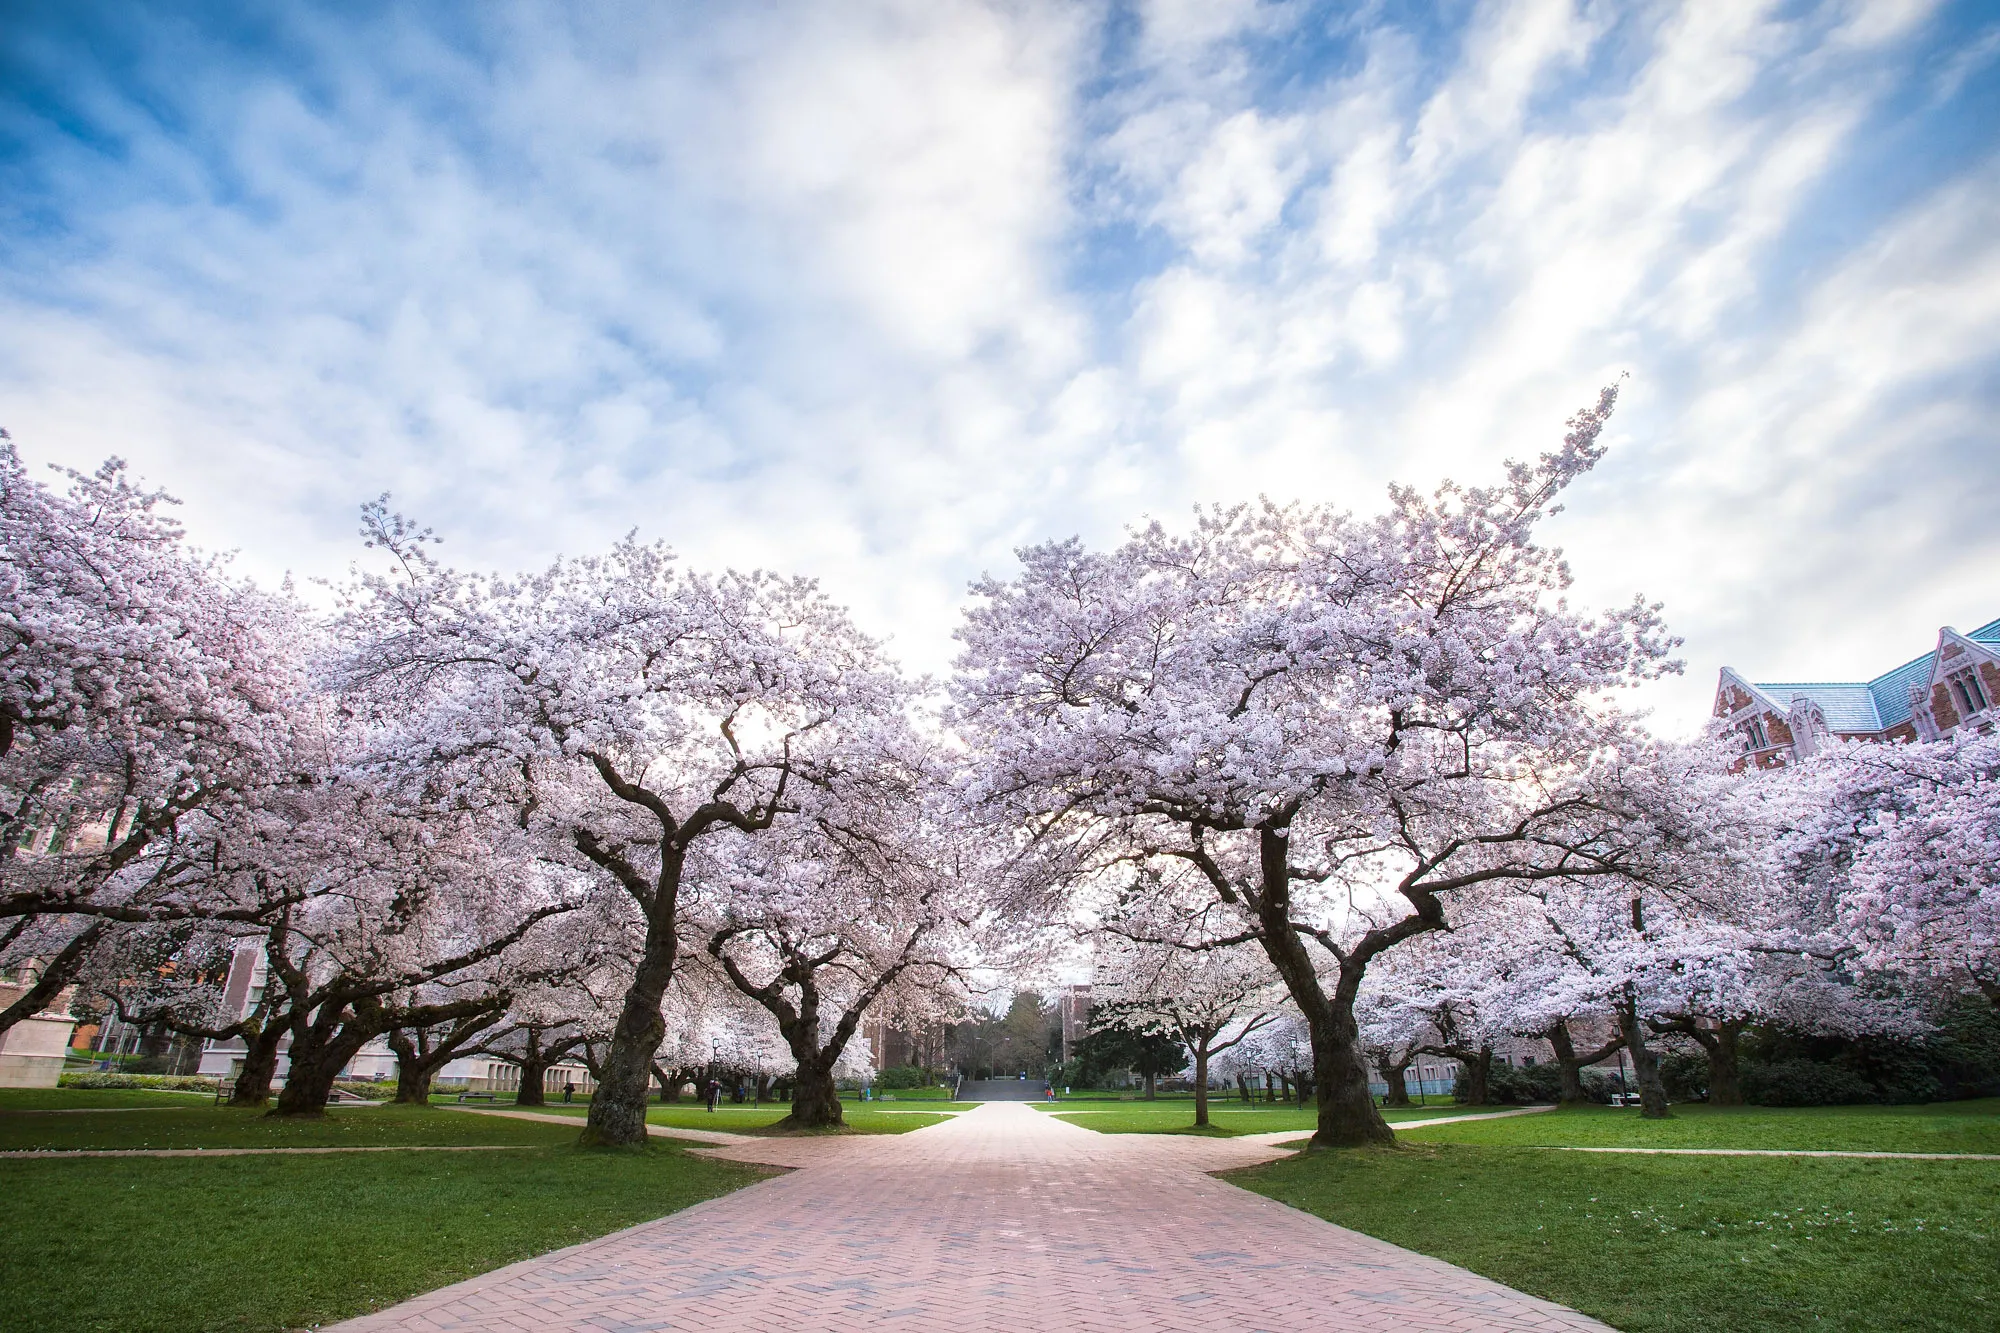 Virtual cherry blossom tours replace campus tradition at U. Washington